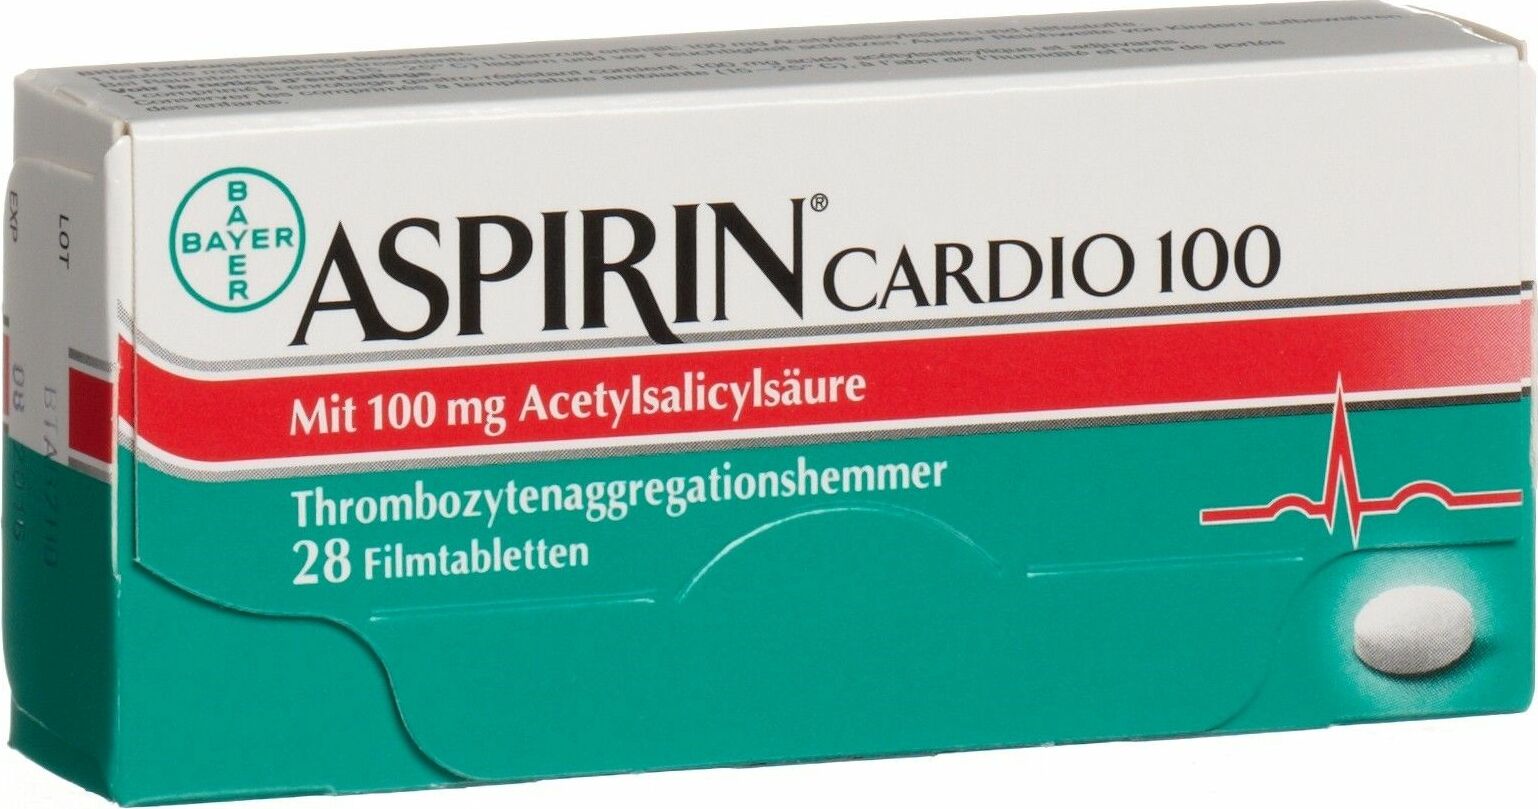 Aspirin Cardio 100 Filmtabletten 100mg 28 Stück in der Adler Apotheke